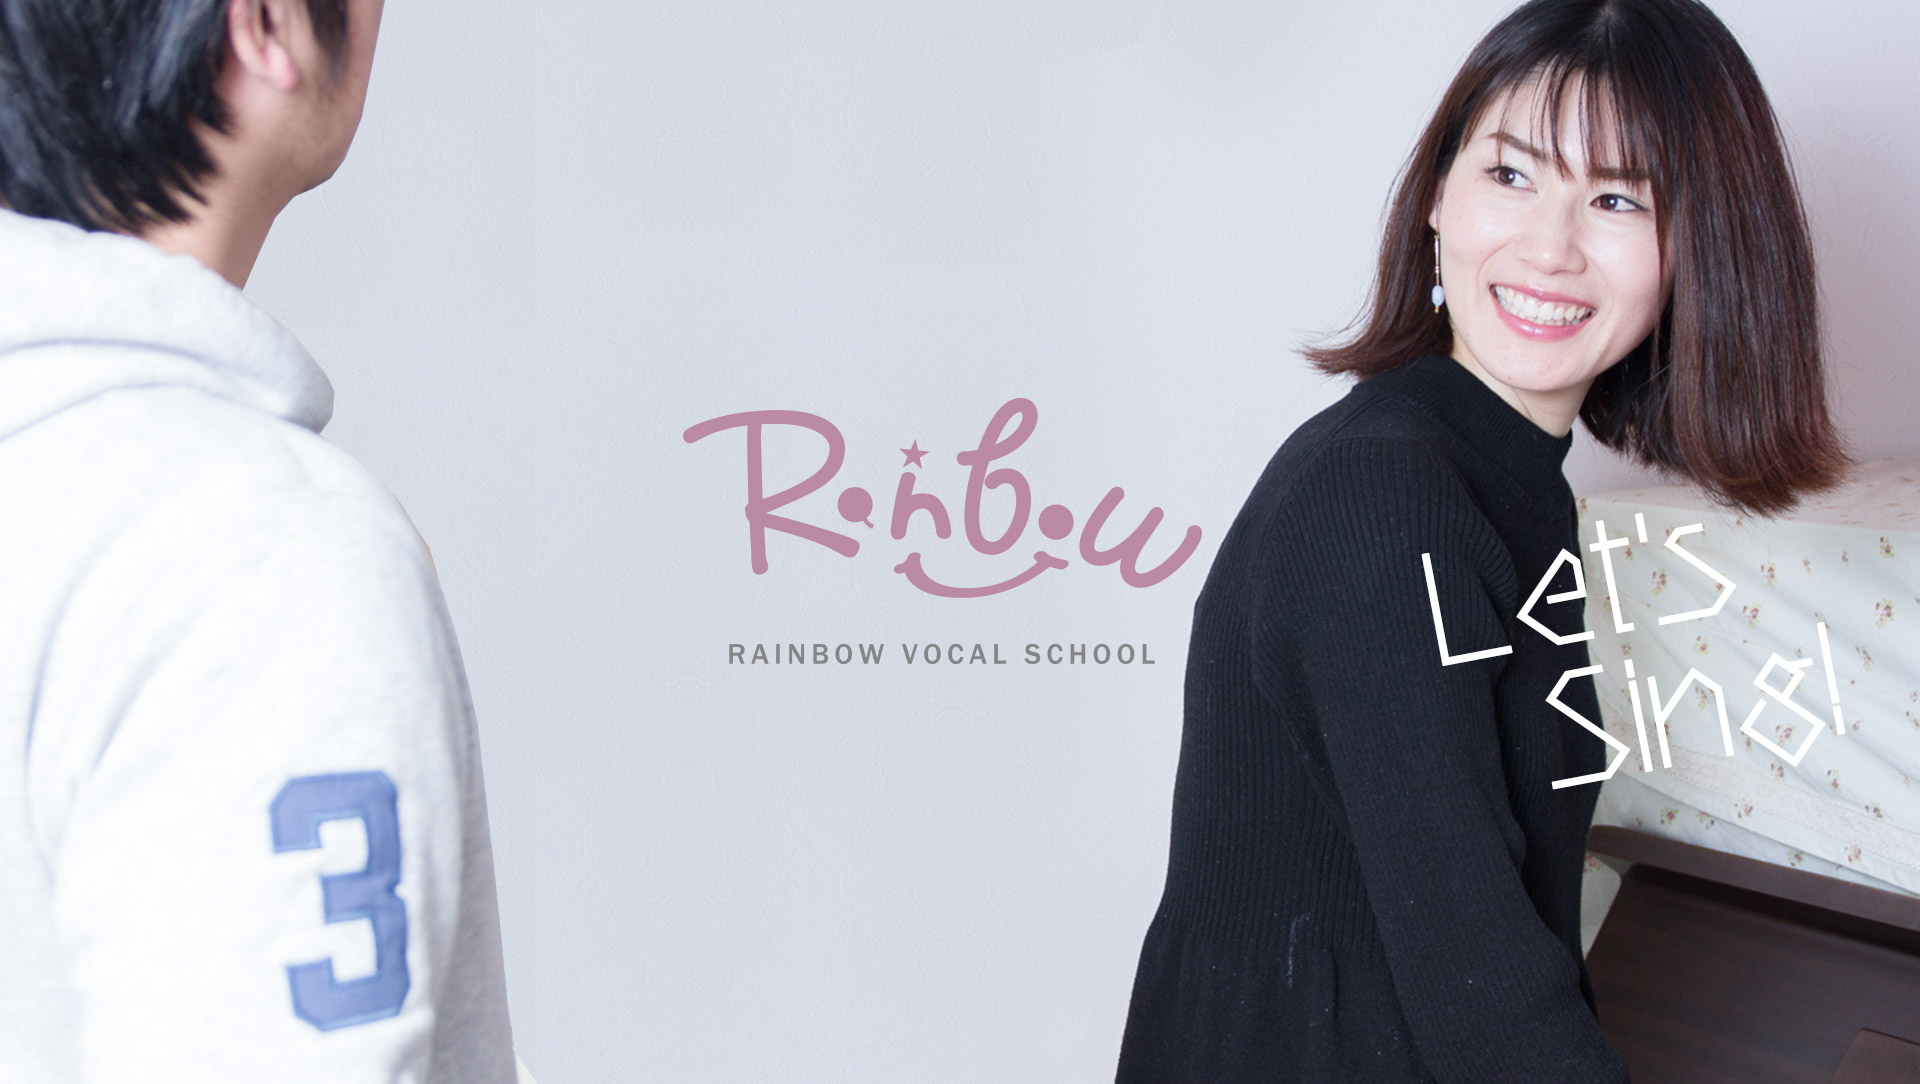 Rainbow Vocal School